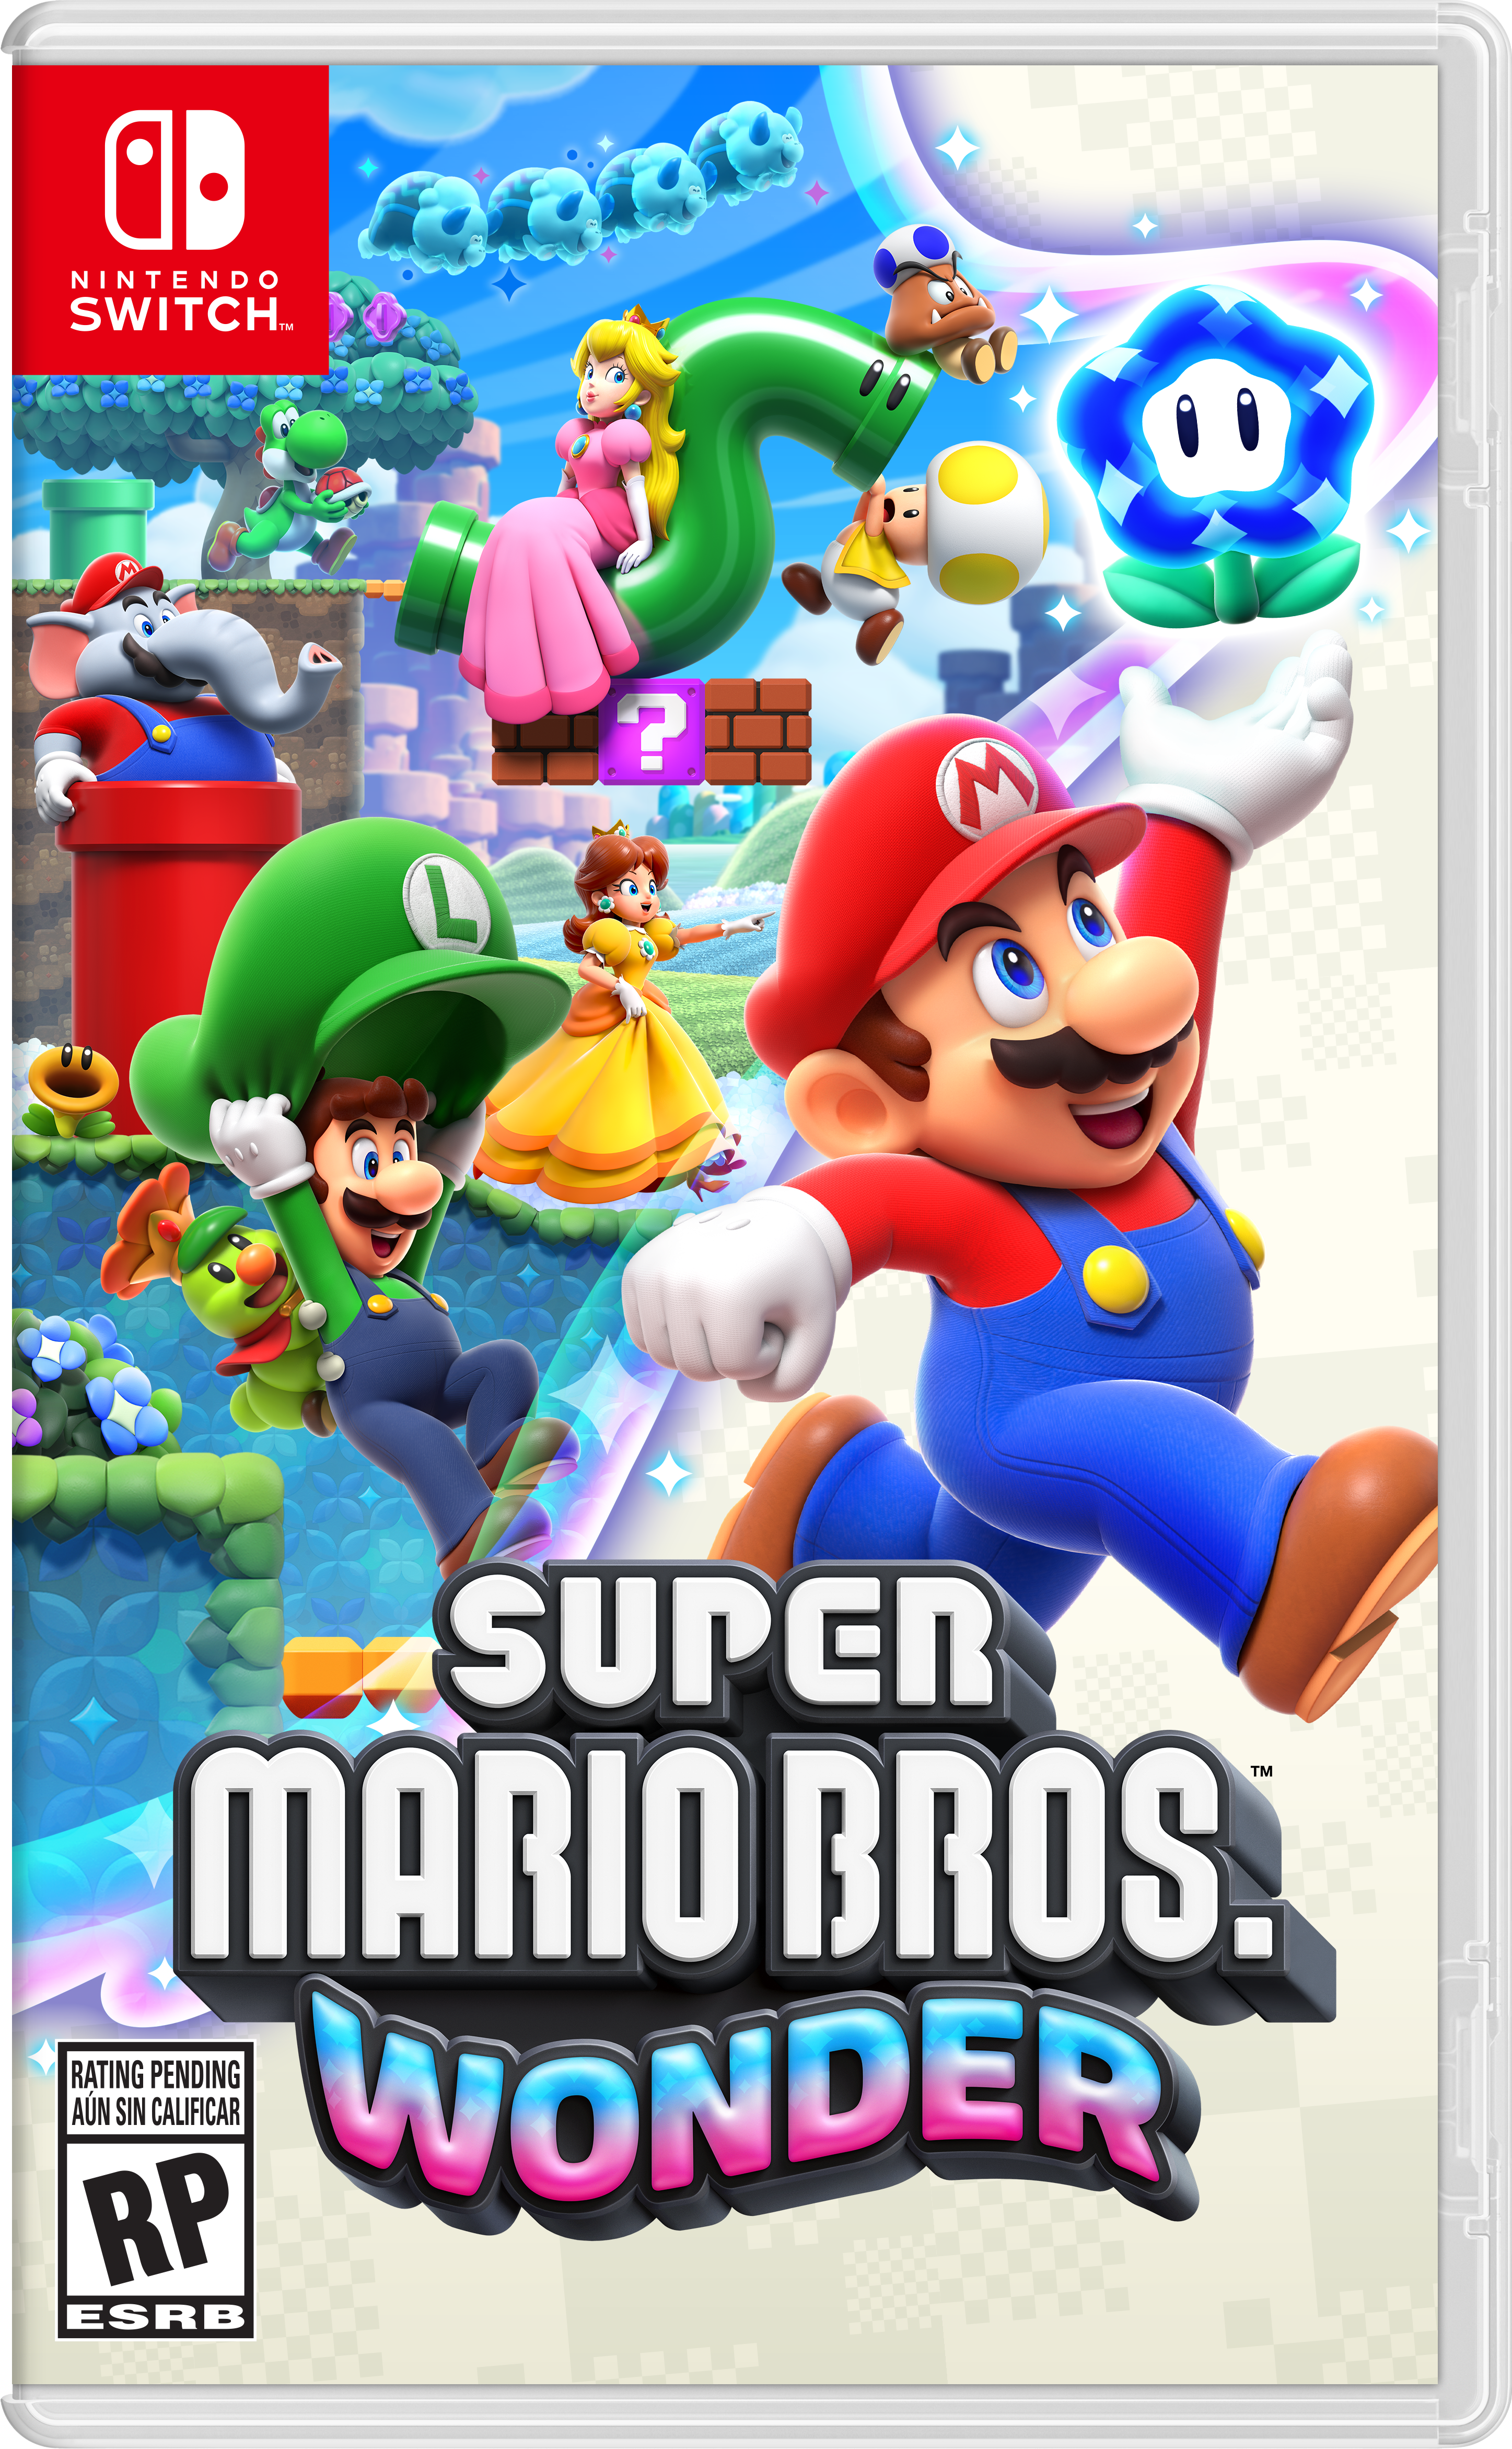 Nintendo Switch : Super Mario Land 2, Alone in the Dark